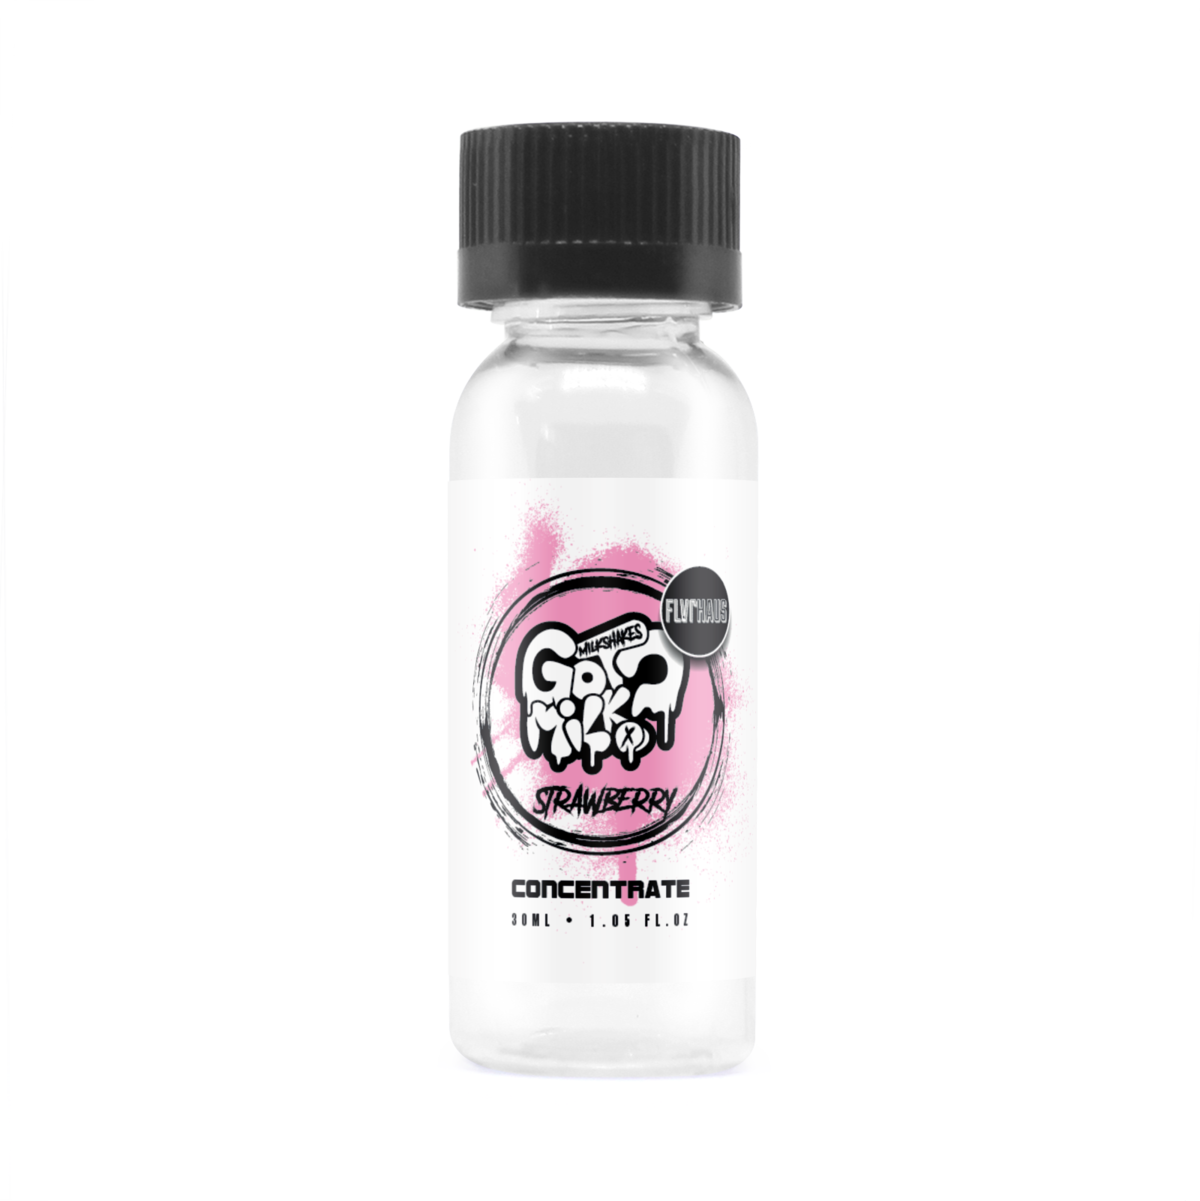 Strawberry Milkshake Concentrate E-liquid by Got Milk 30ml